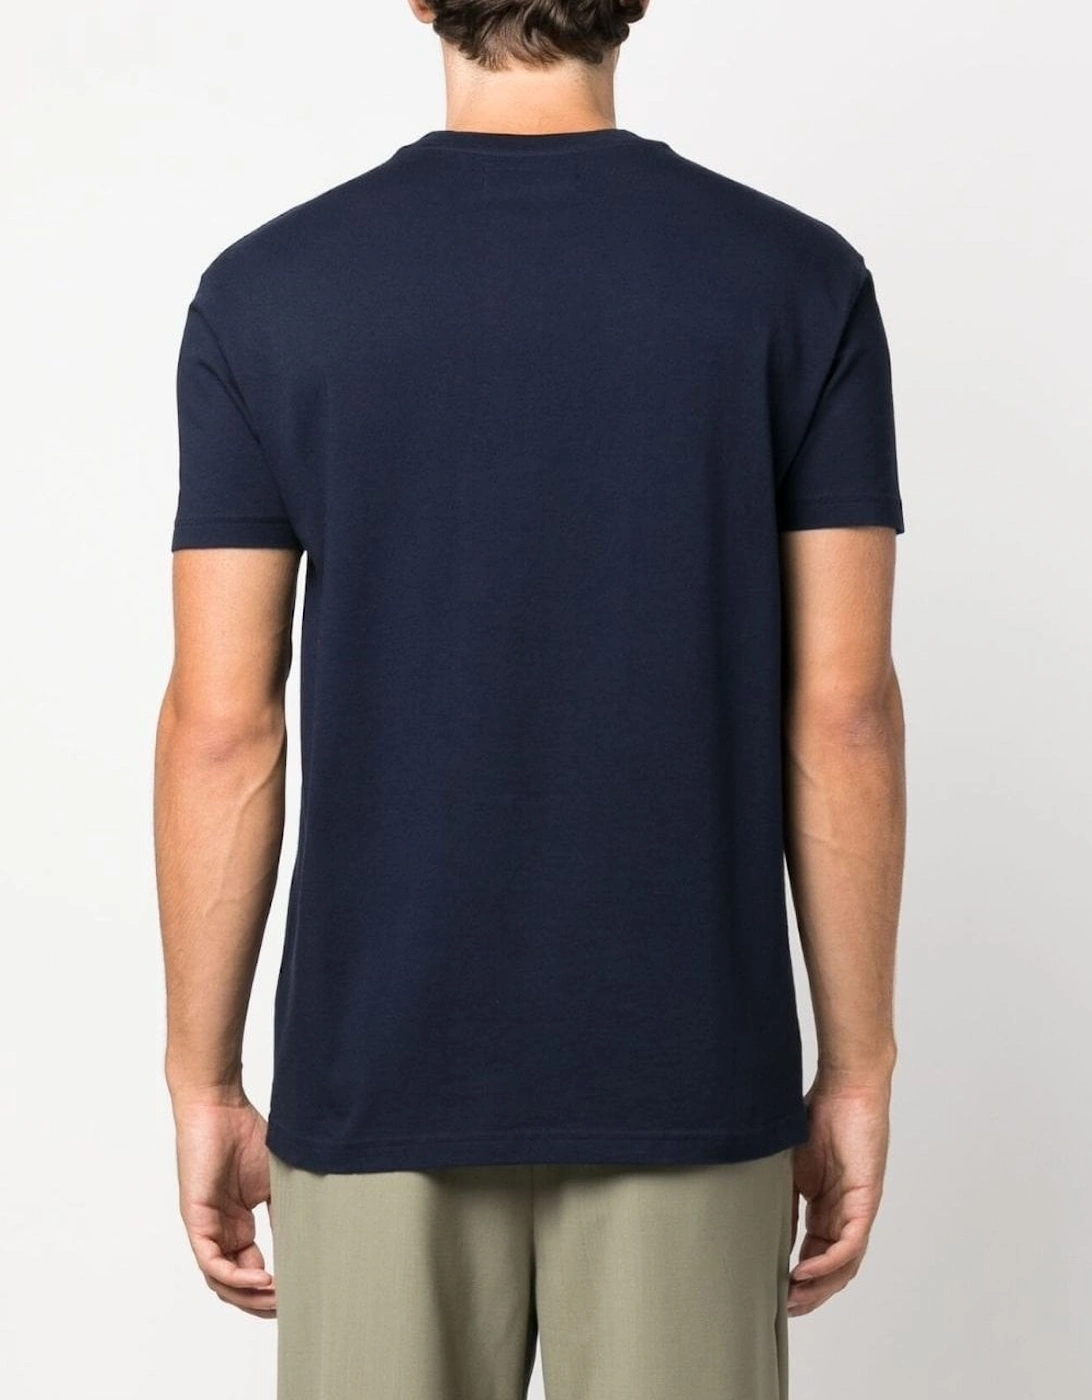 Classic Mutlicoloured Orb T-shirt Navy